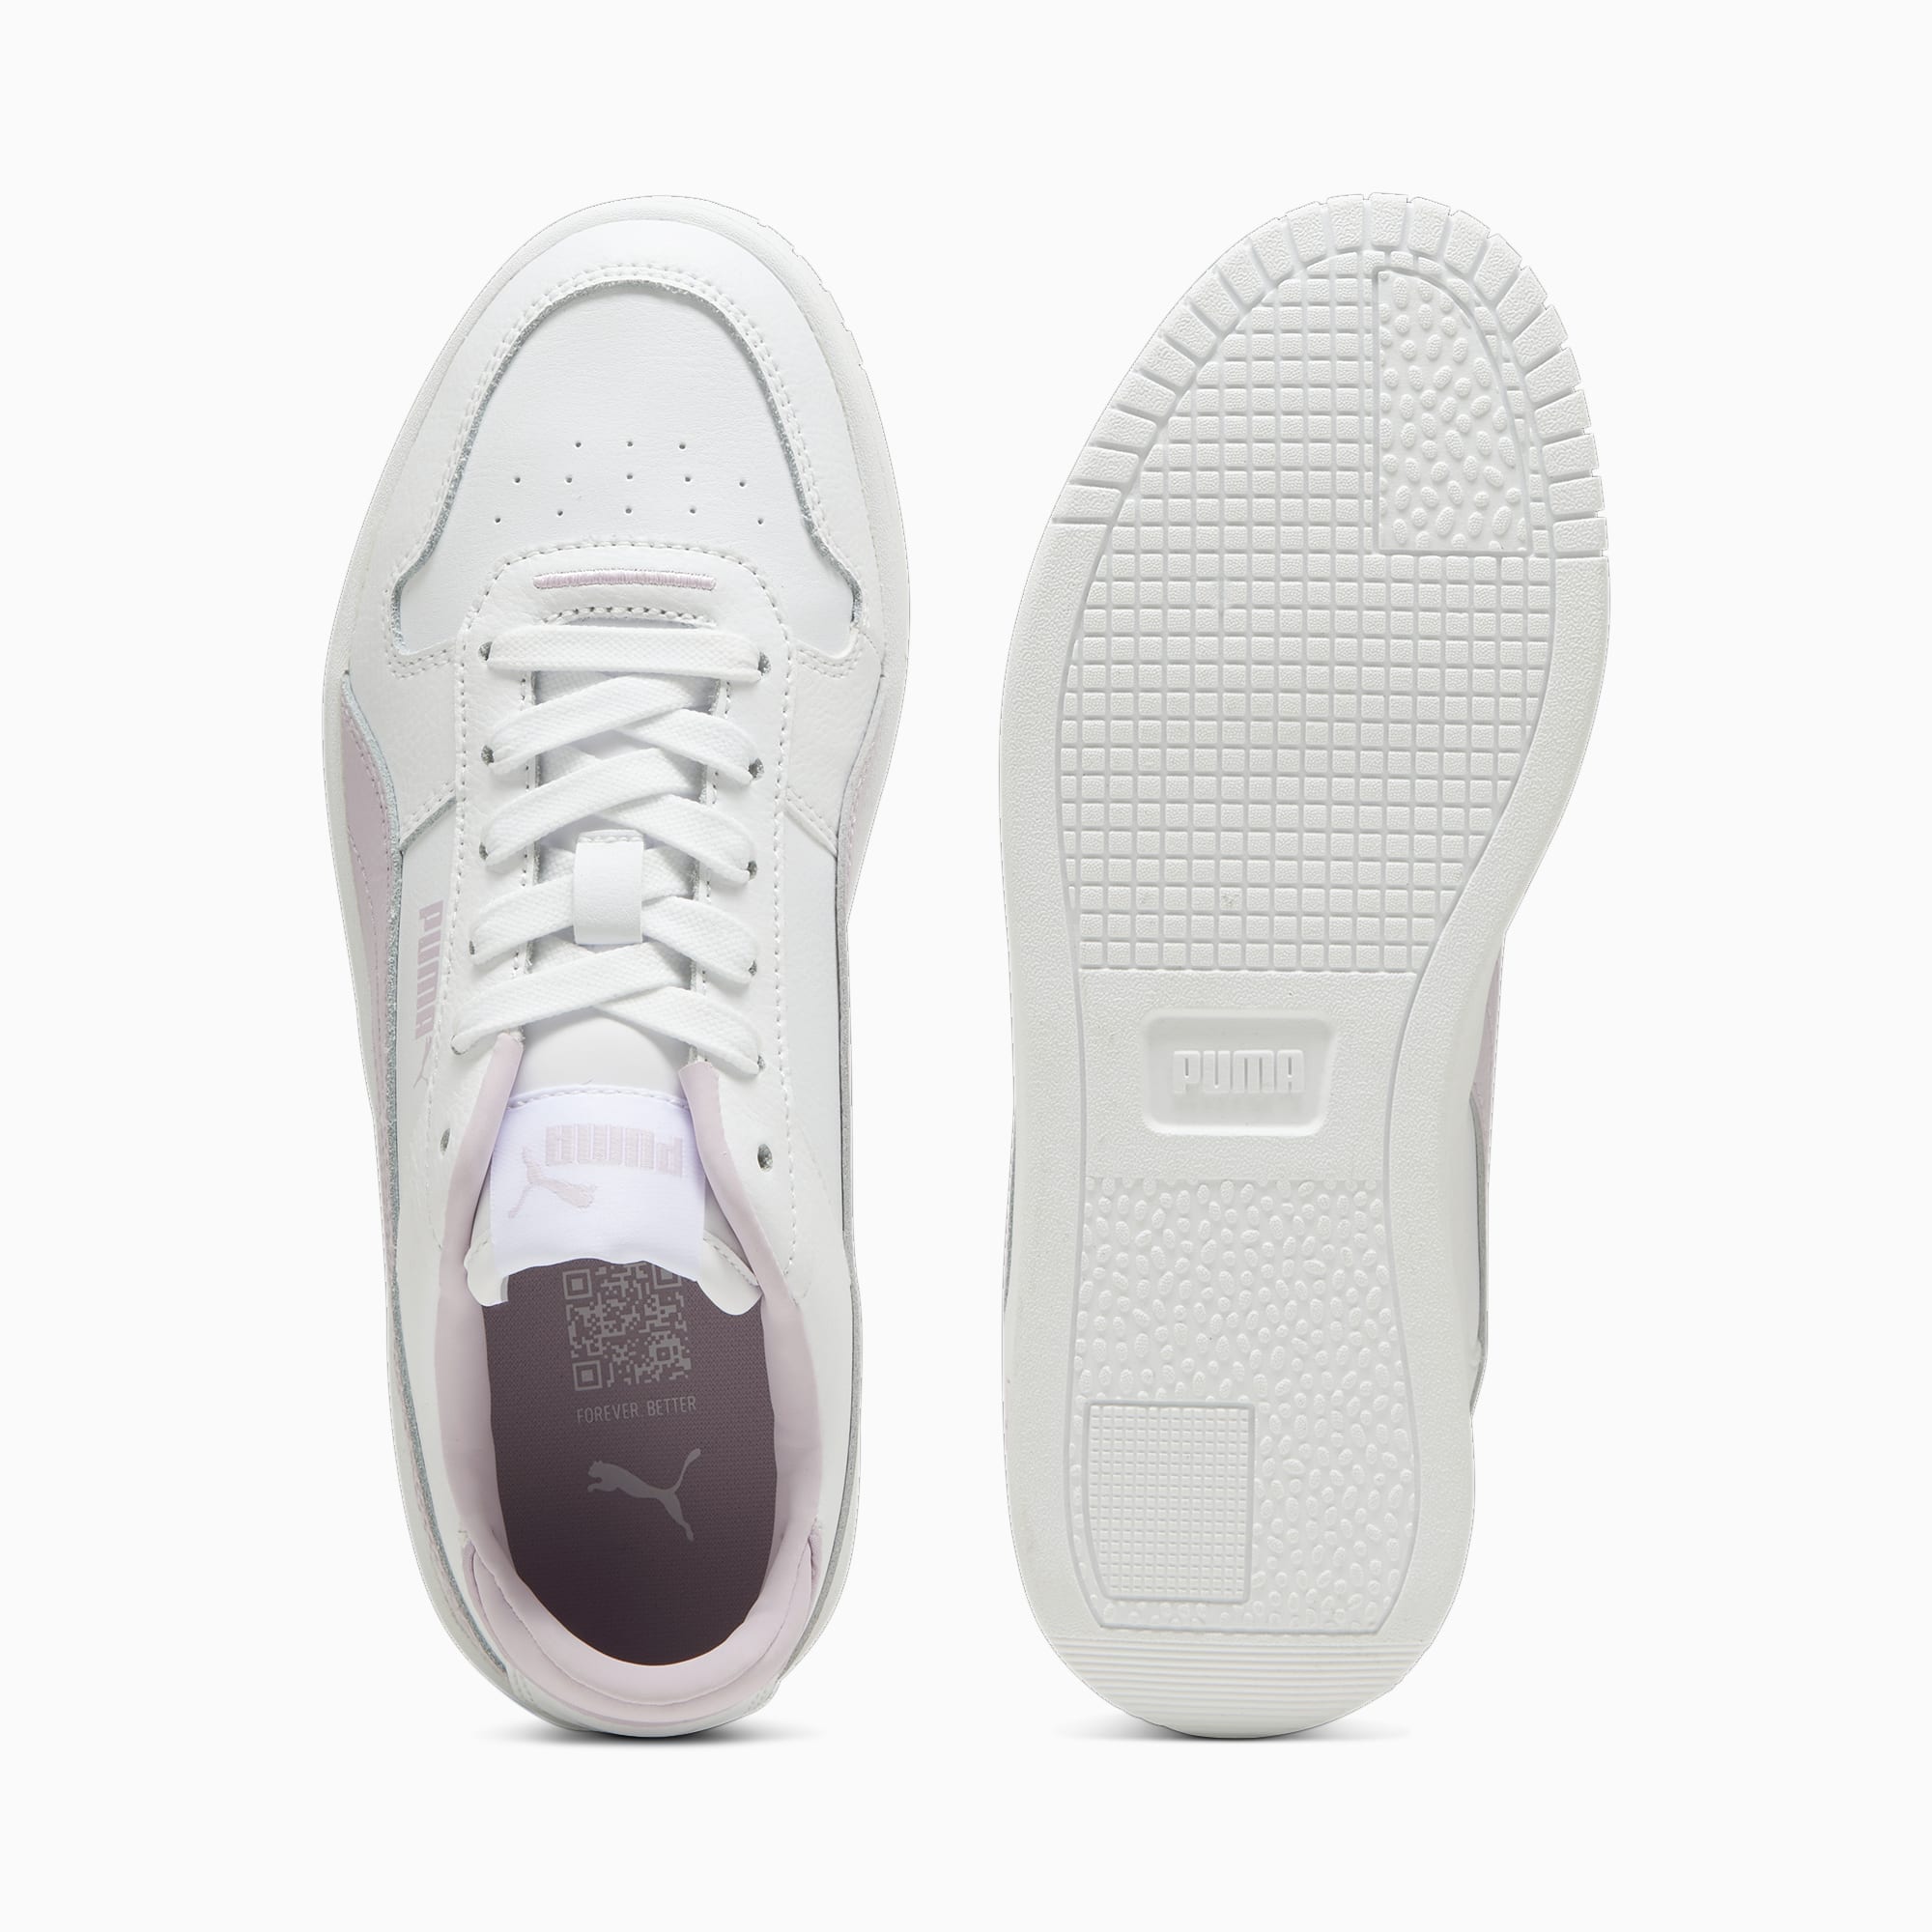 PUMA Carina Street Youth Sneakers, White/Grape Mist